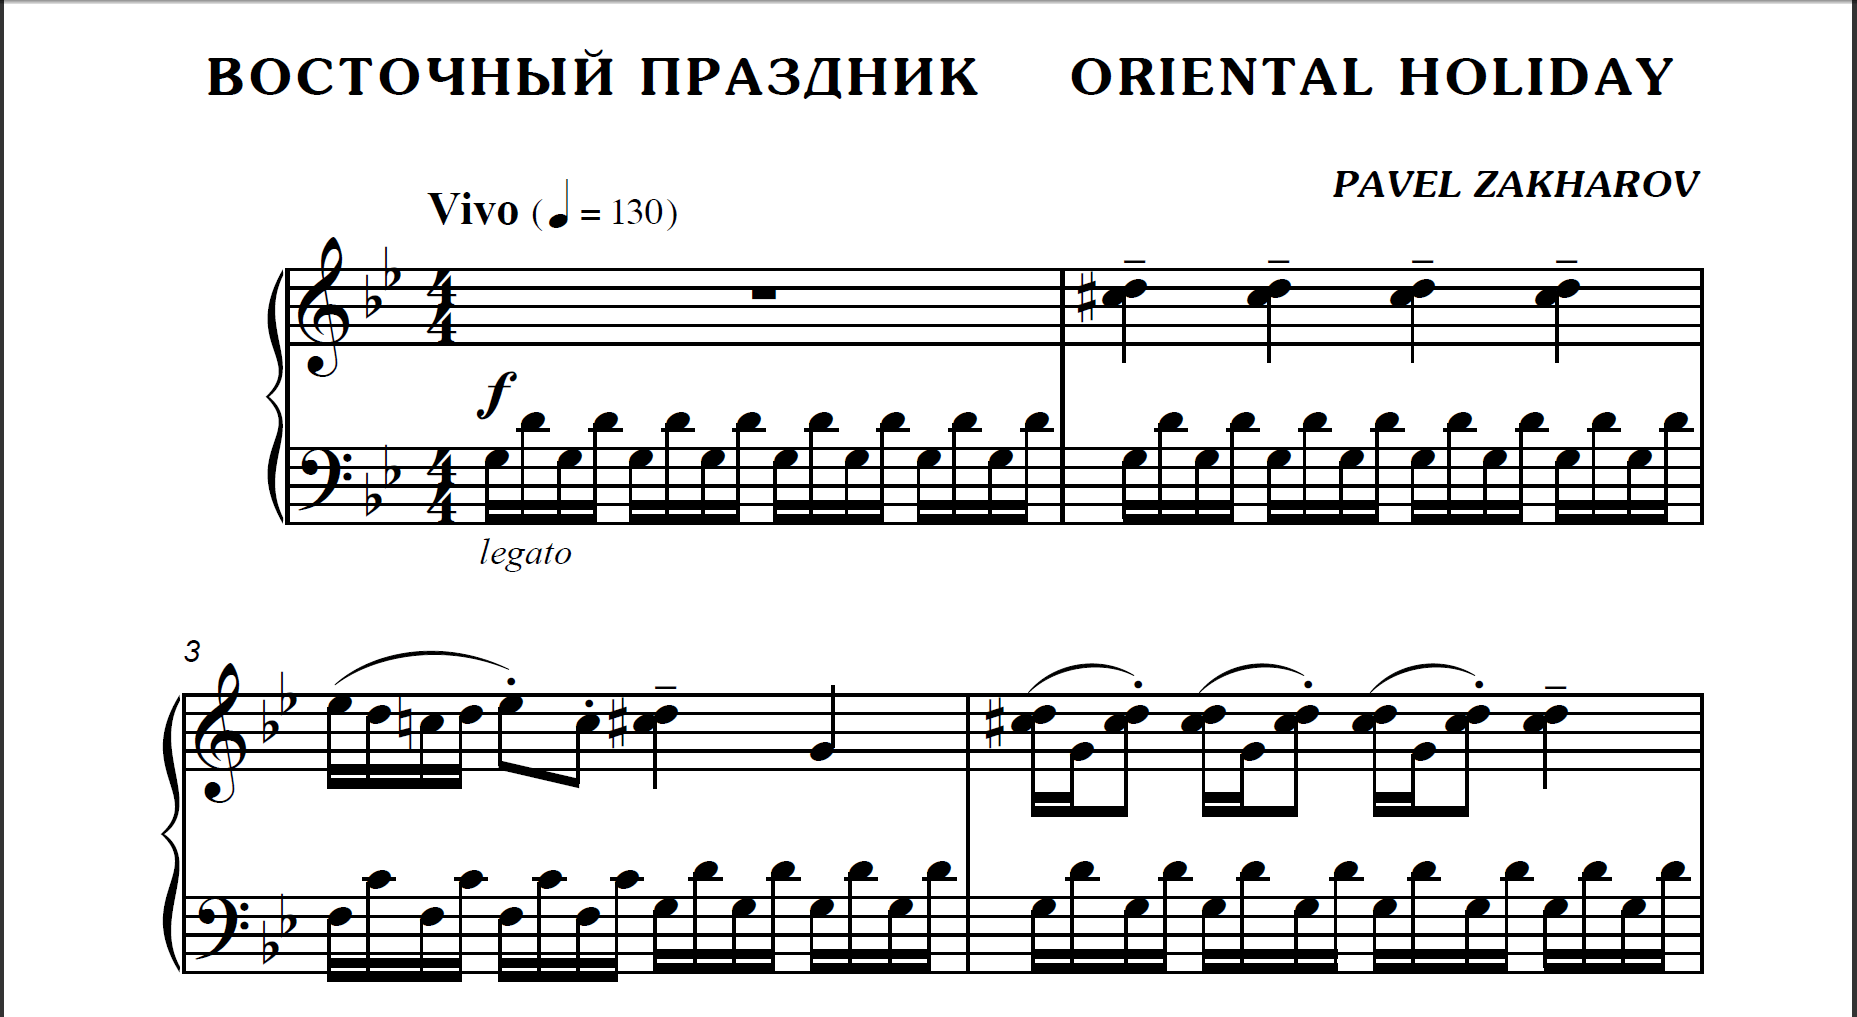 1s07 Oriental Holiday, PAVEL ZAKHAROV / piano